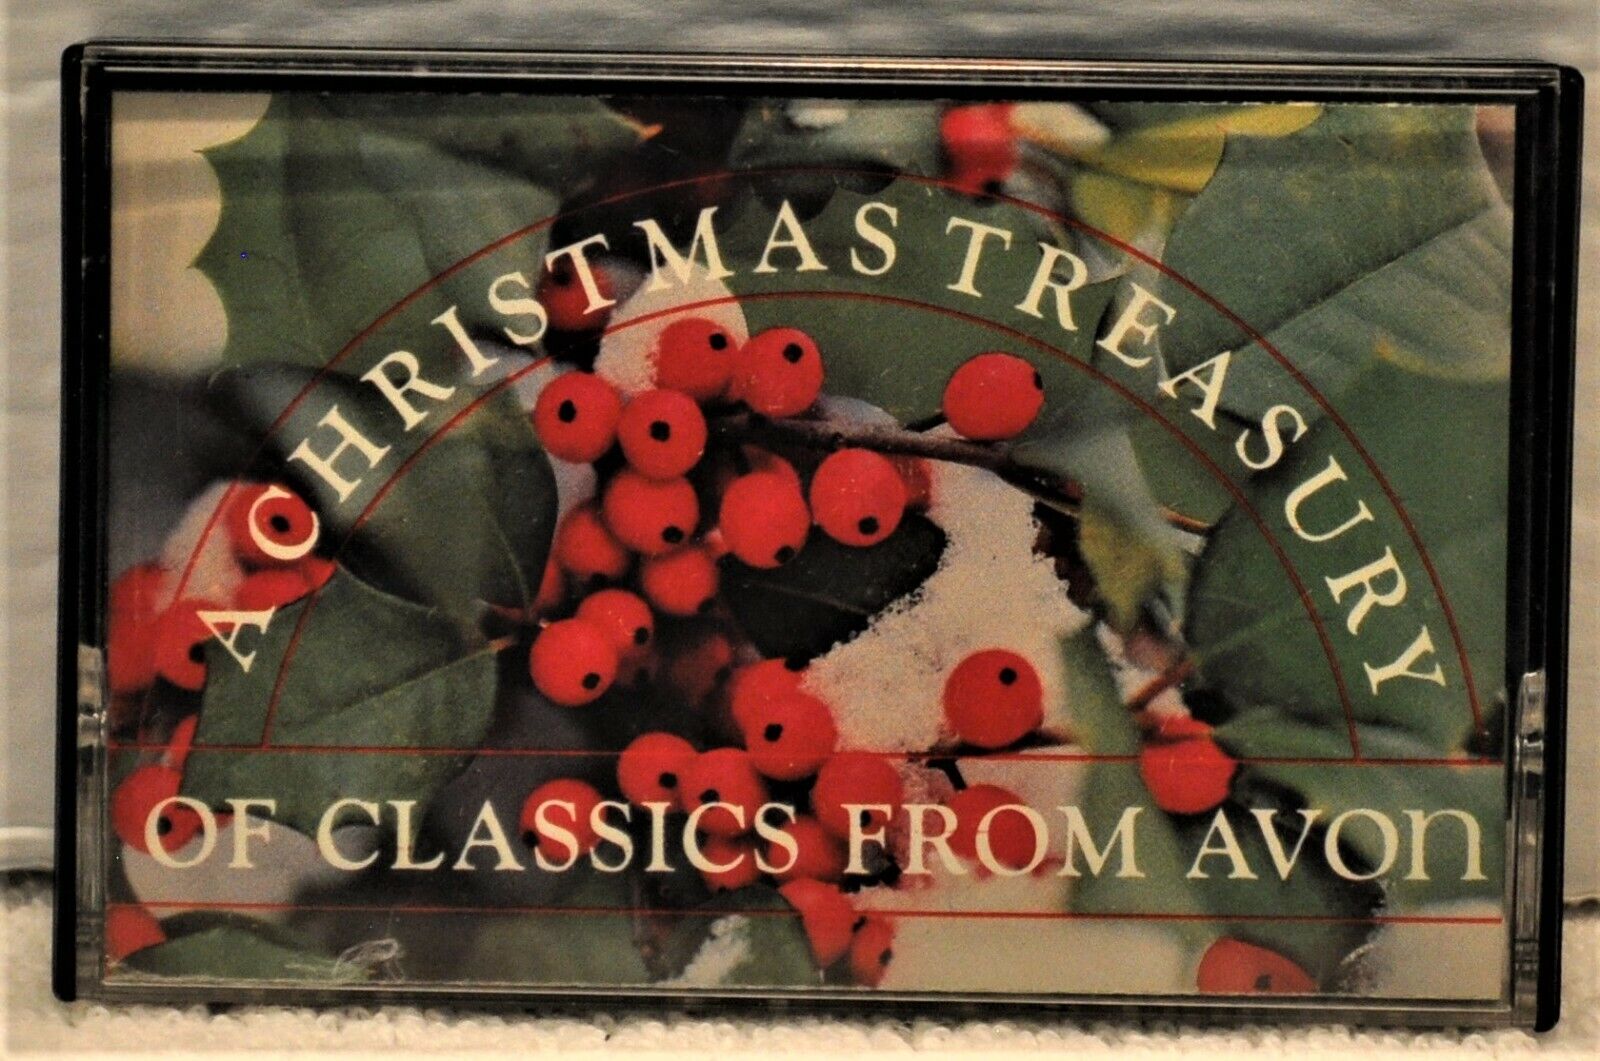 A CHRISTMAS TREASURY OF CLASSICS BY AVON Audio Cassette RCA DPK1-0716